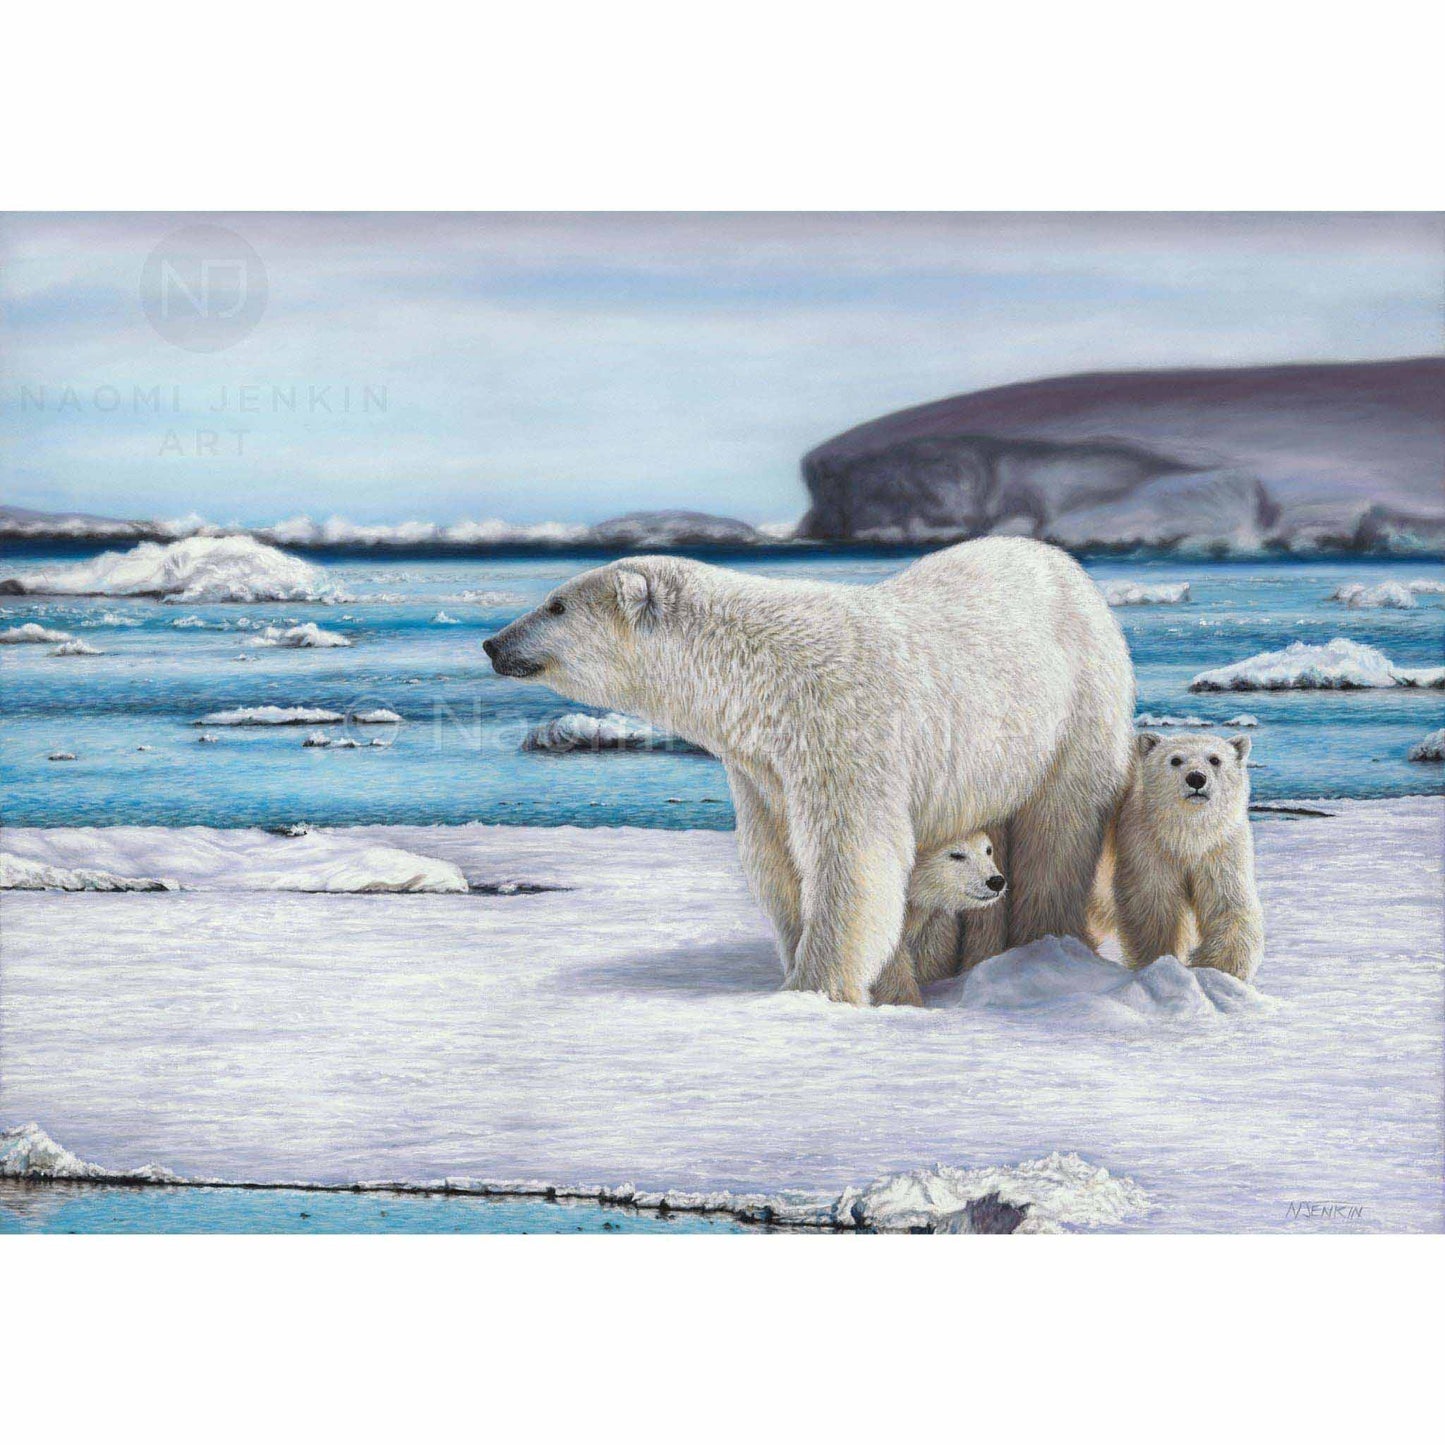 Polar bear art by wildlife artist Naomi Jenkin. 